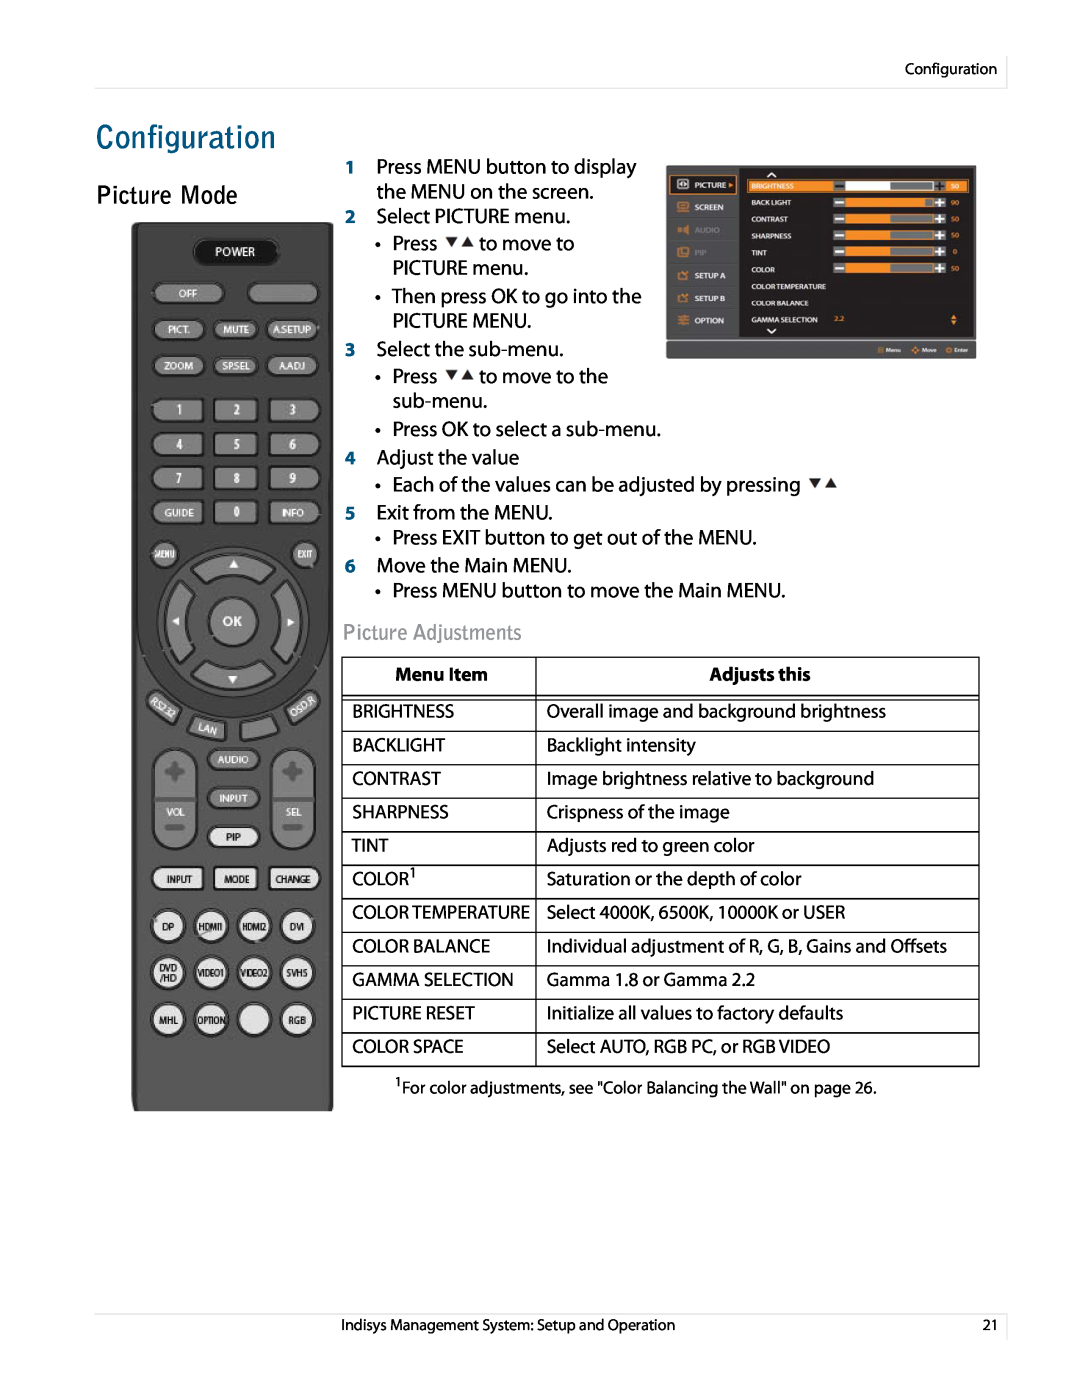 Planar PS5580 manual Configuration, Picture Mode, Picture Adjustments 